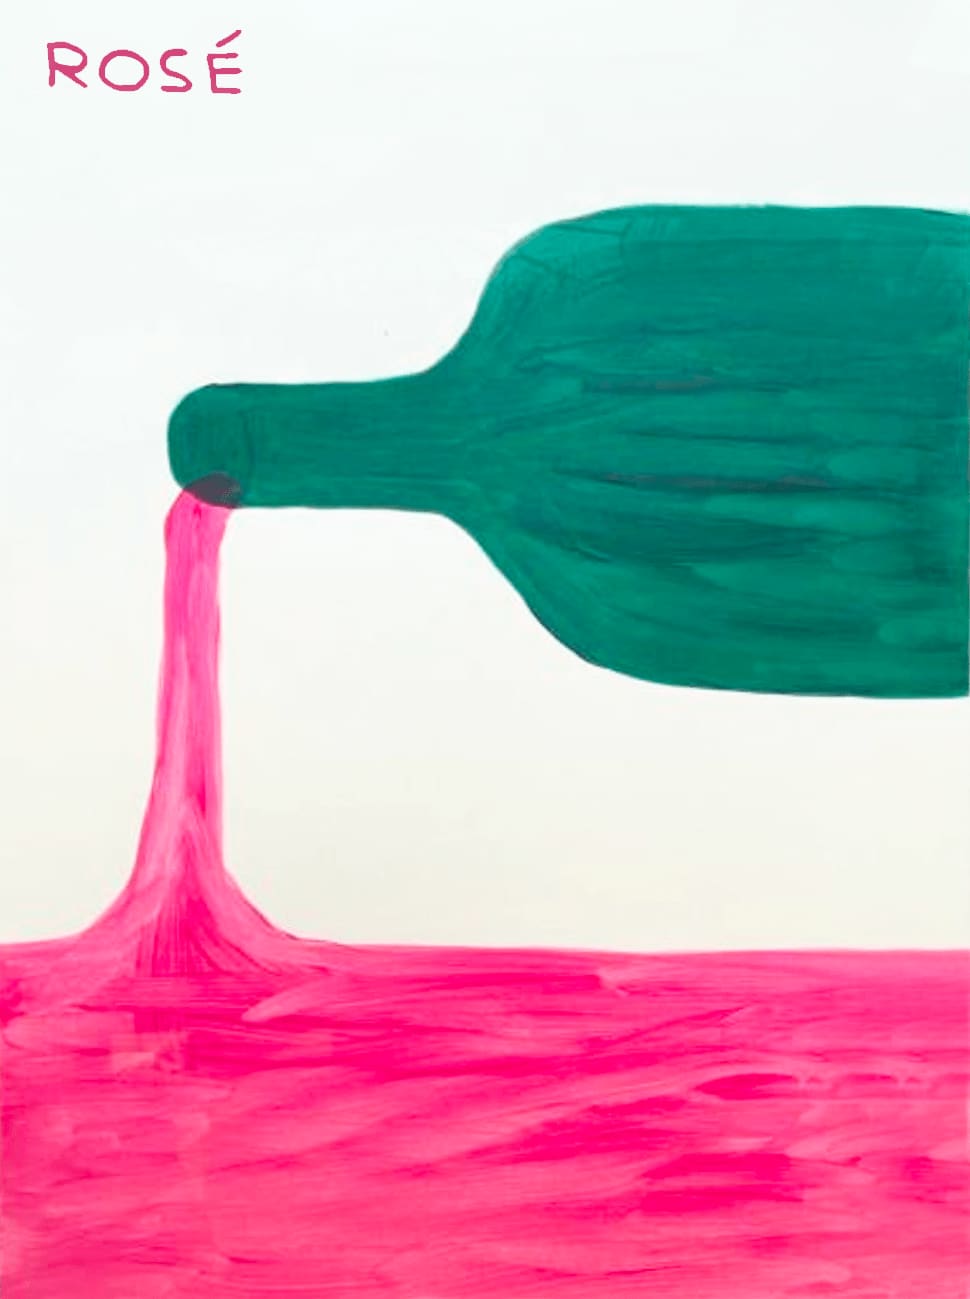 David Shrigley Rosé Acrylic on paper